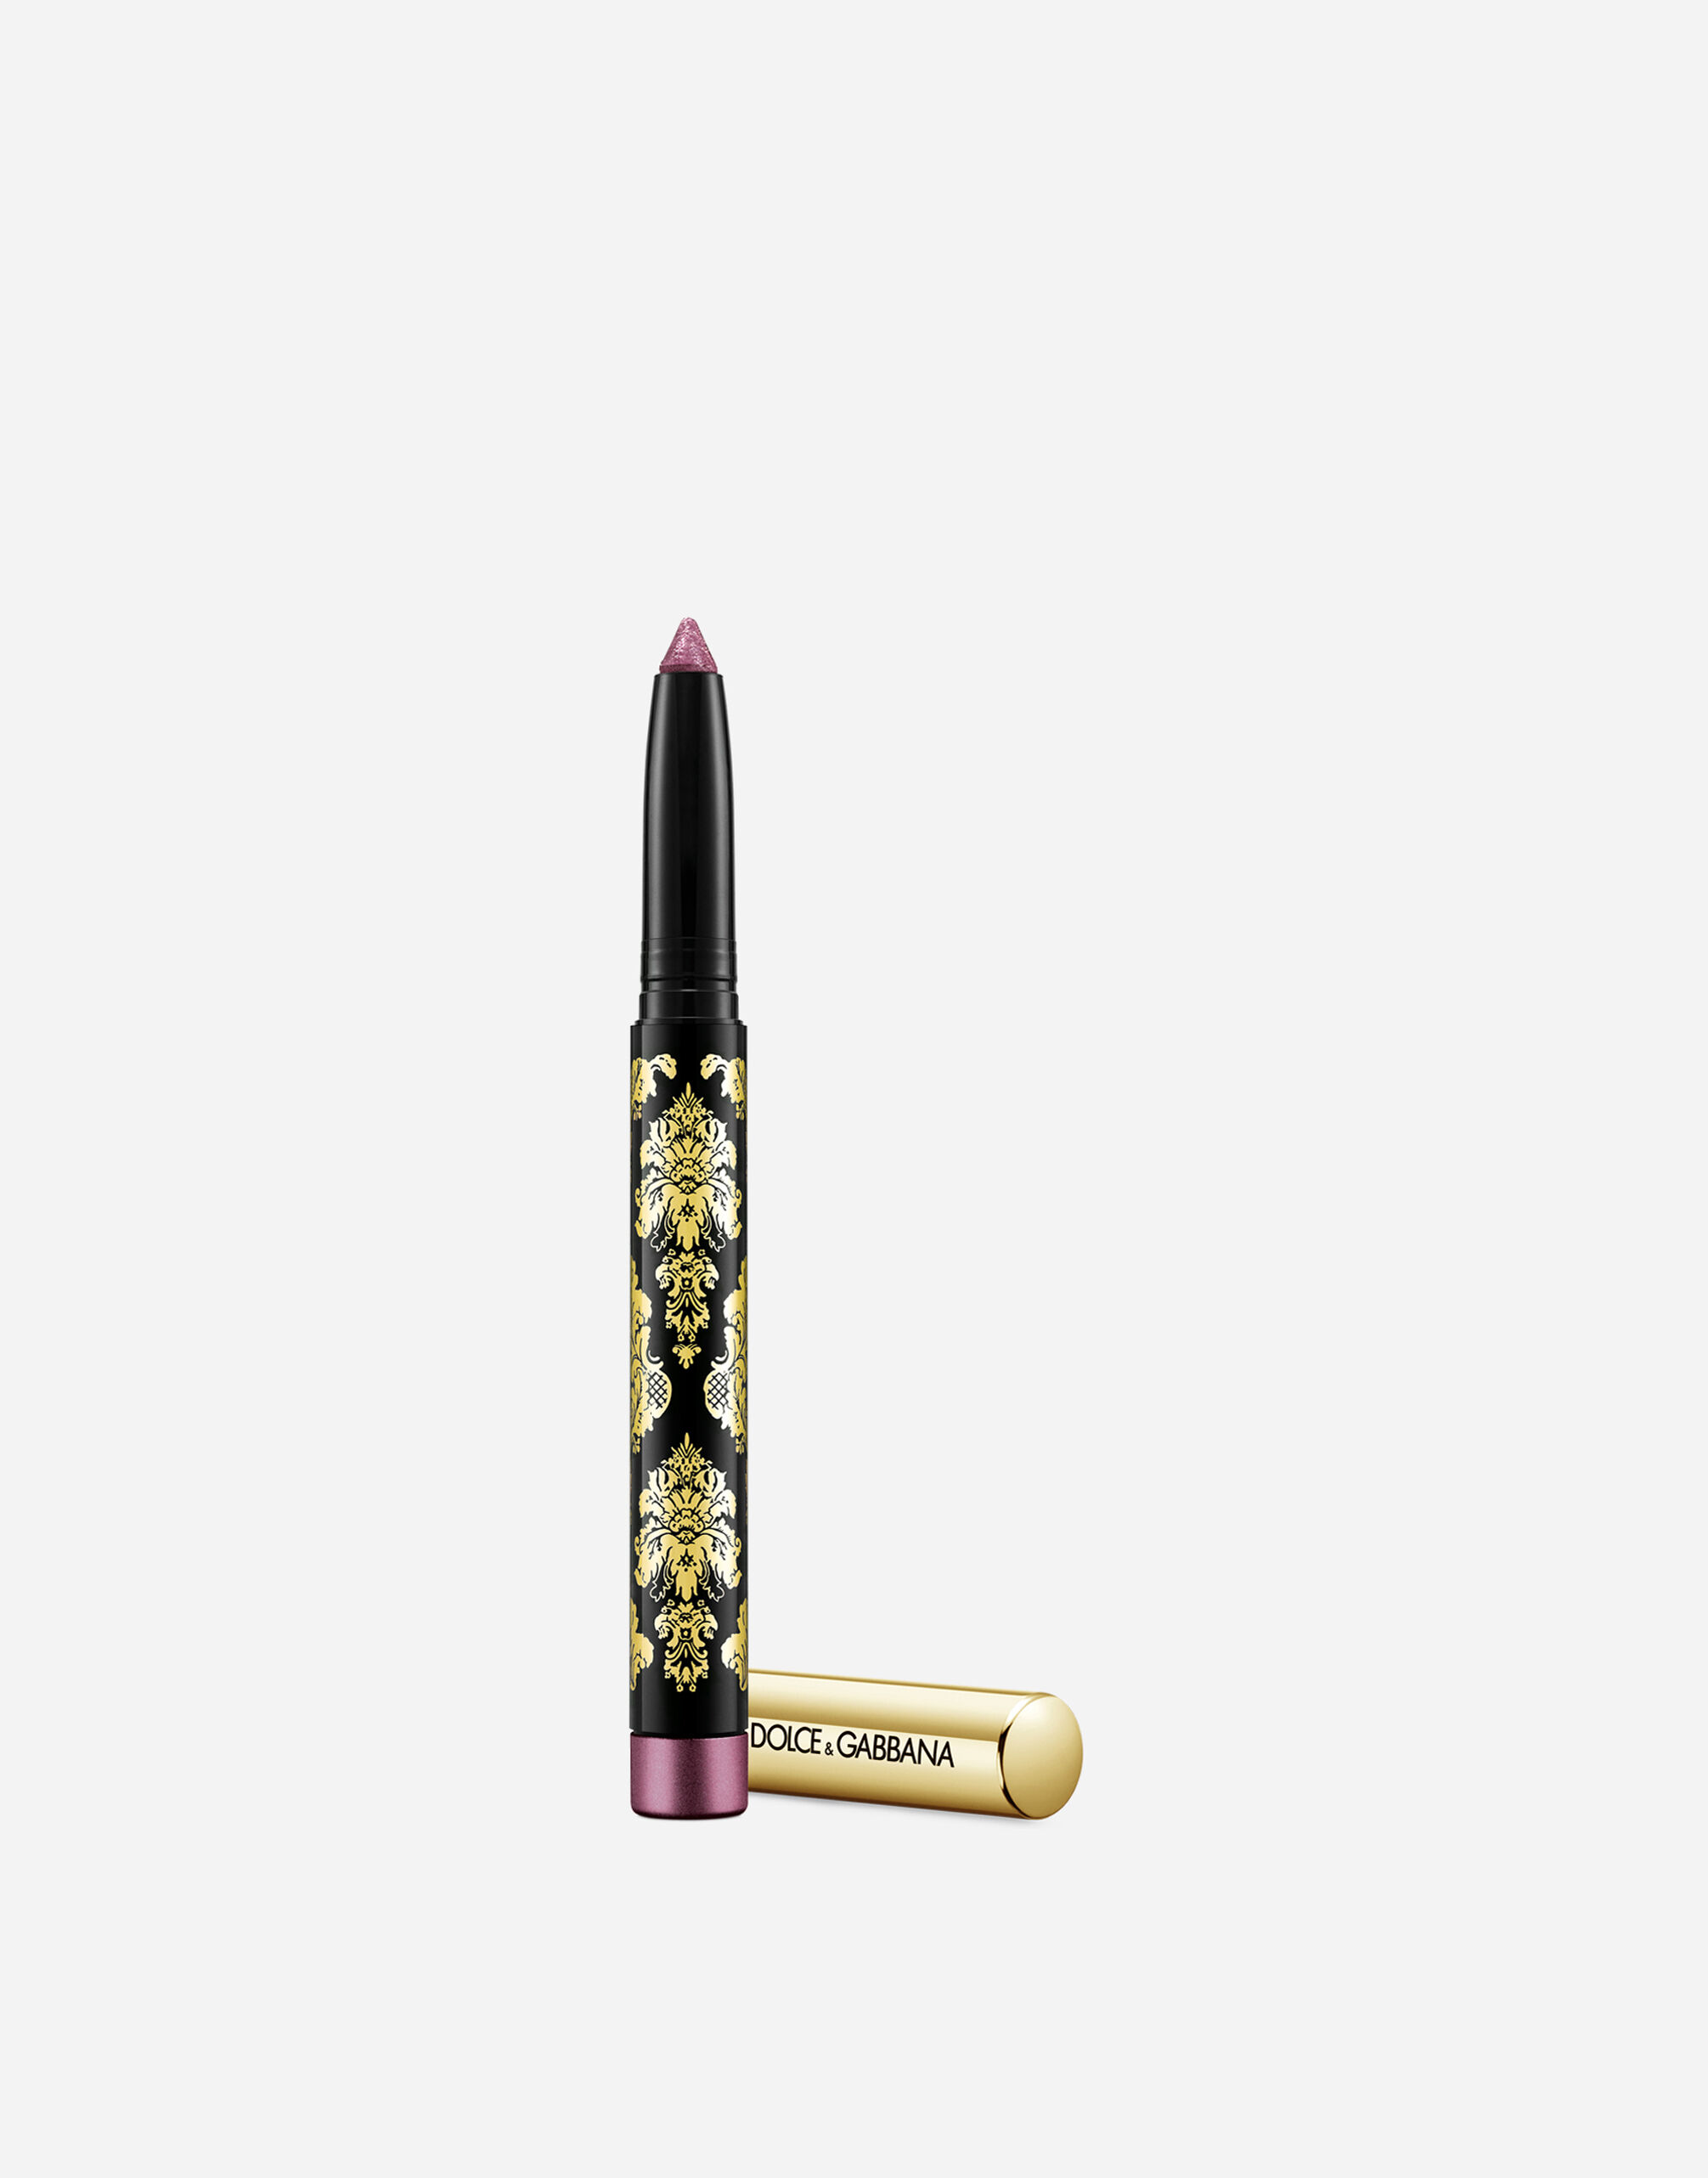 Тени-карандаш для глаз Dolce & Gabbana Intenseyes кремовые, №9 Dahlia, 1,4 г тени для глаз кремовые influence beauty alien тон 01 5 г